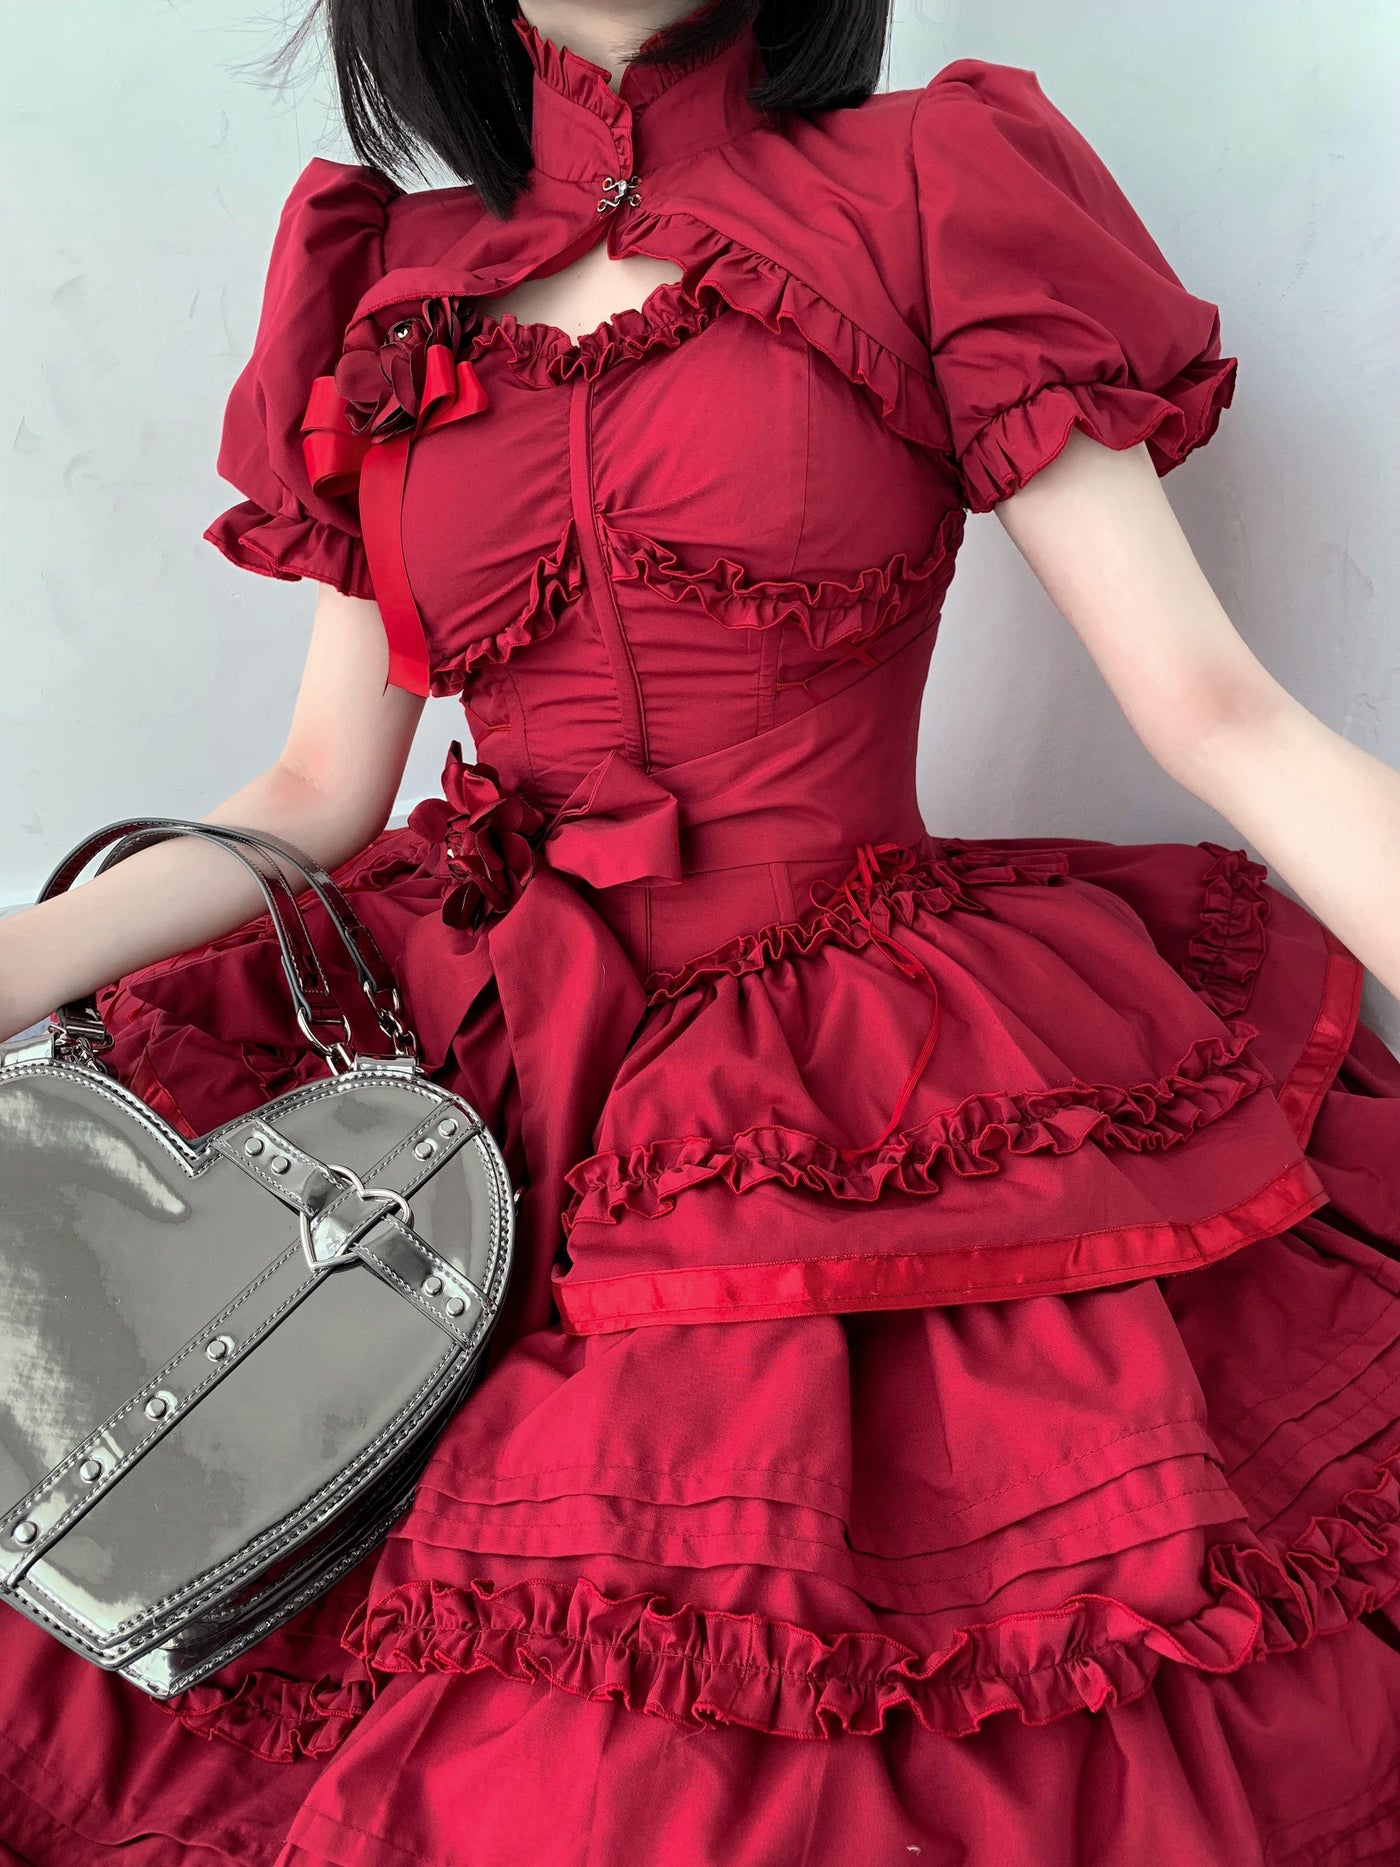 Mengfuzi~LiLith~Gothic Lolita JSK Dress Christmas Short Sleeve Bolero XS wine red dress 